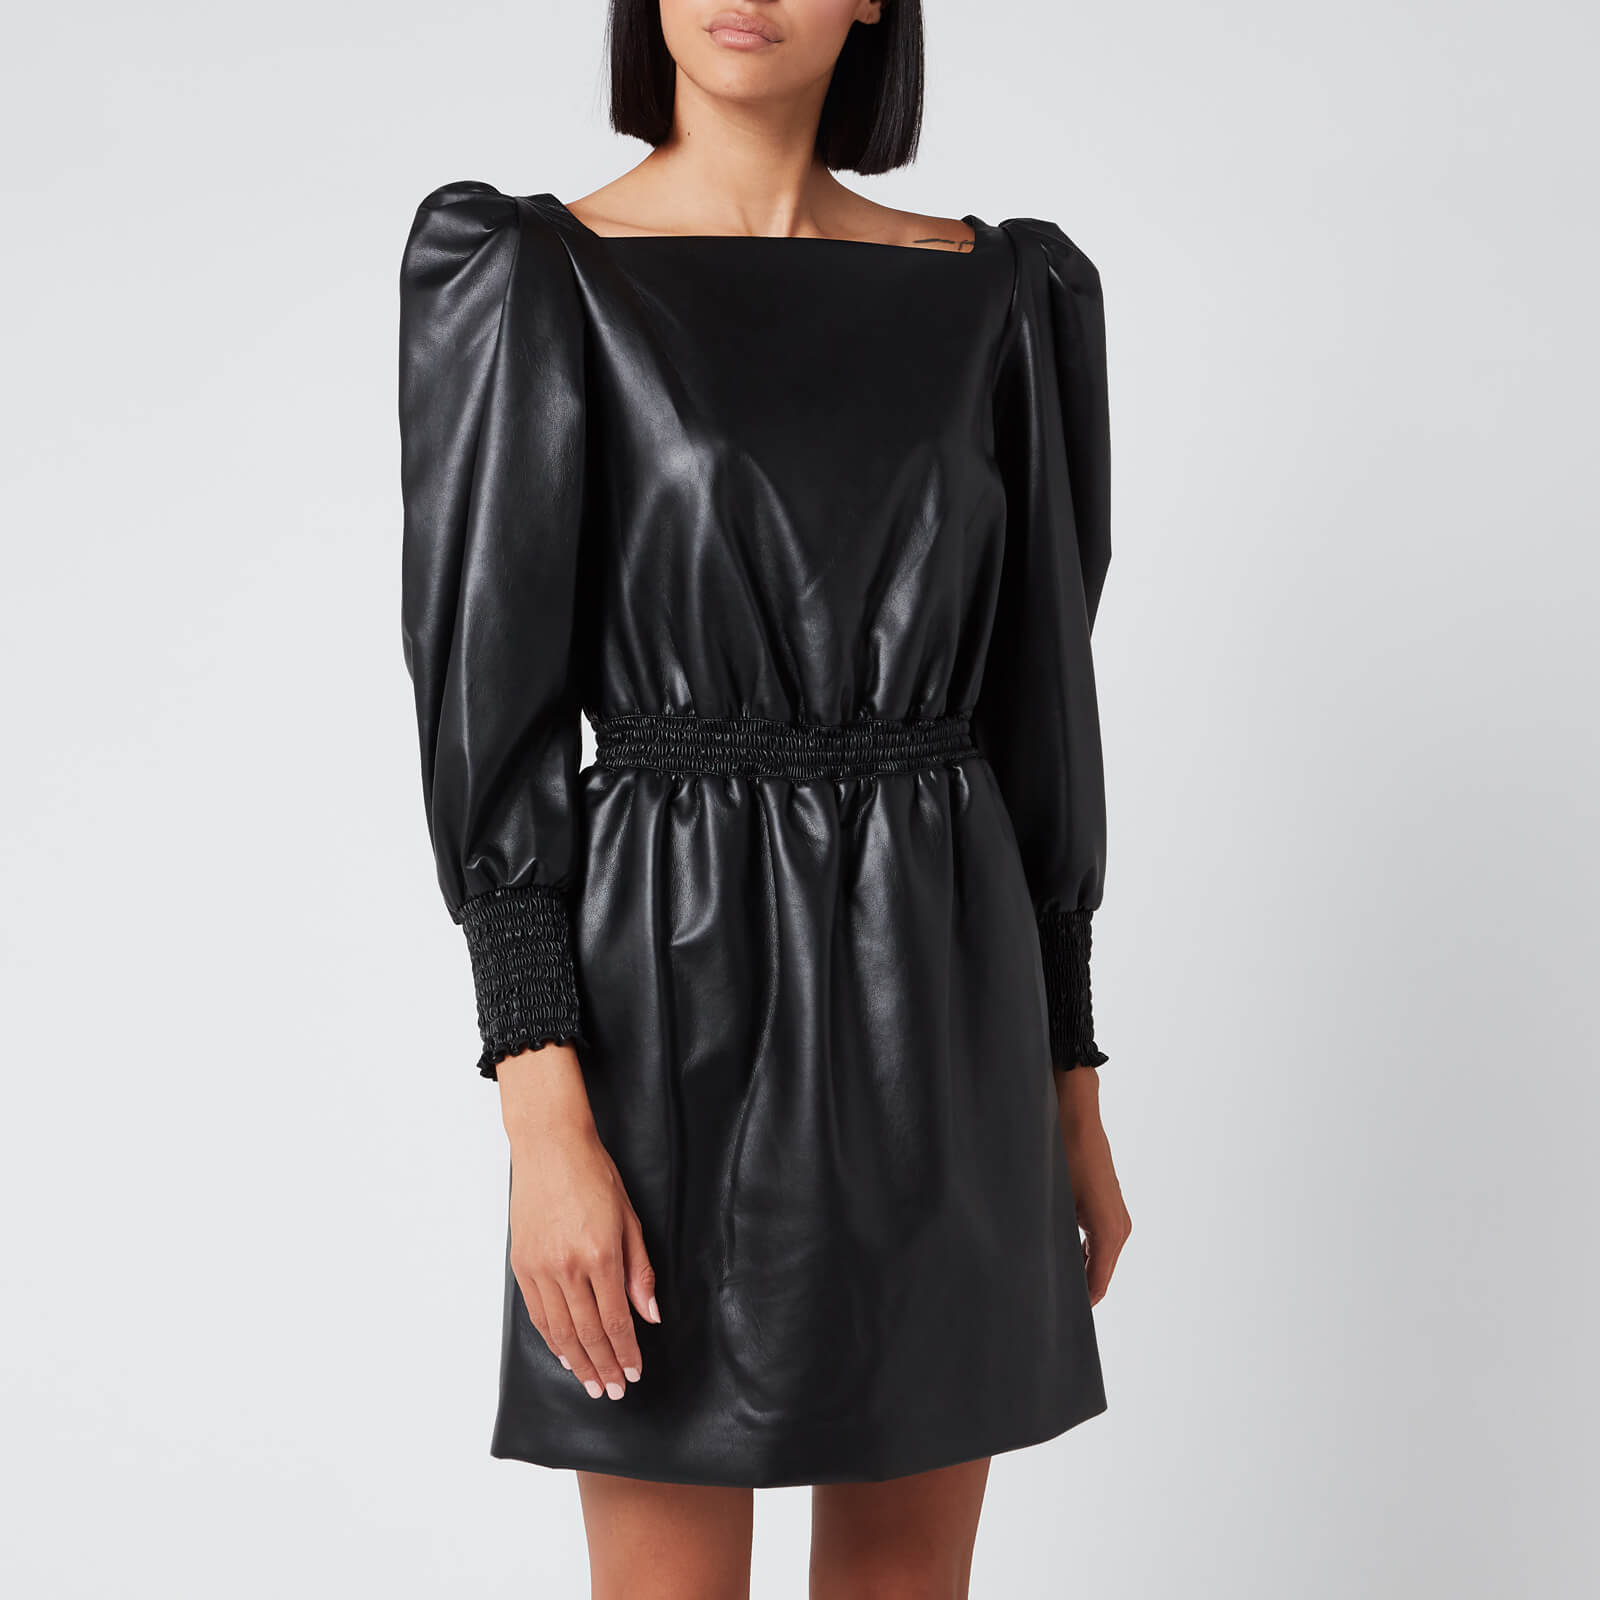 Philosophy di Lorenzo Serafini Women's Faux Leather Dress - Black - IT 42/UK 10